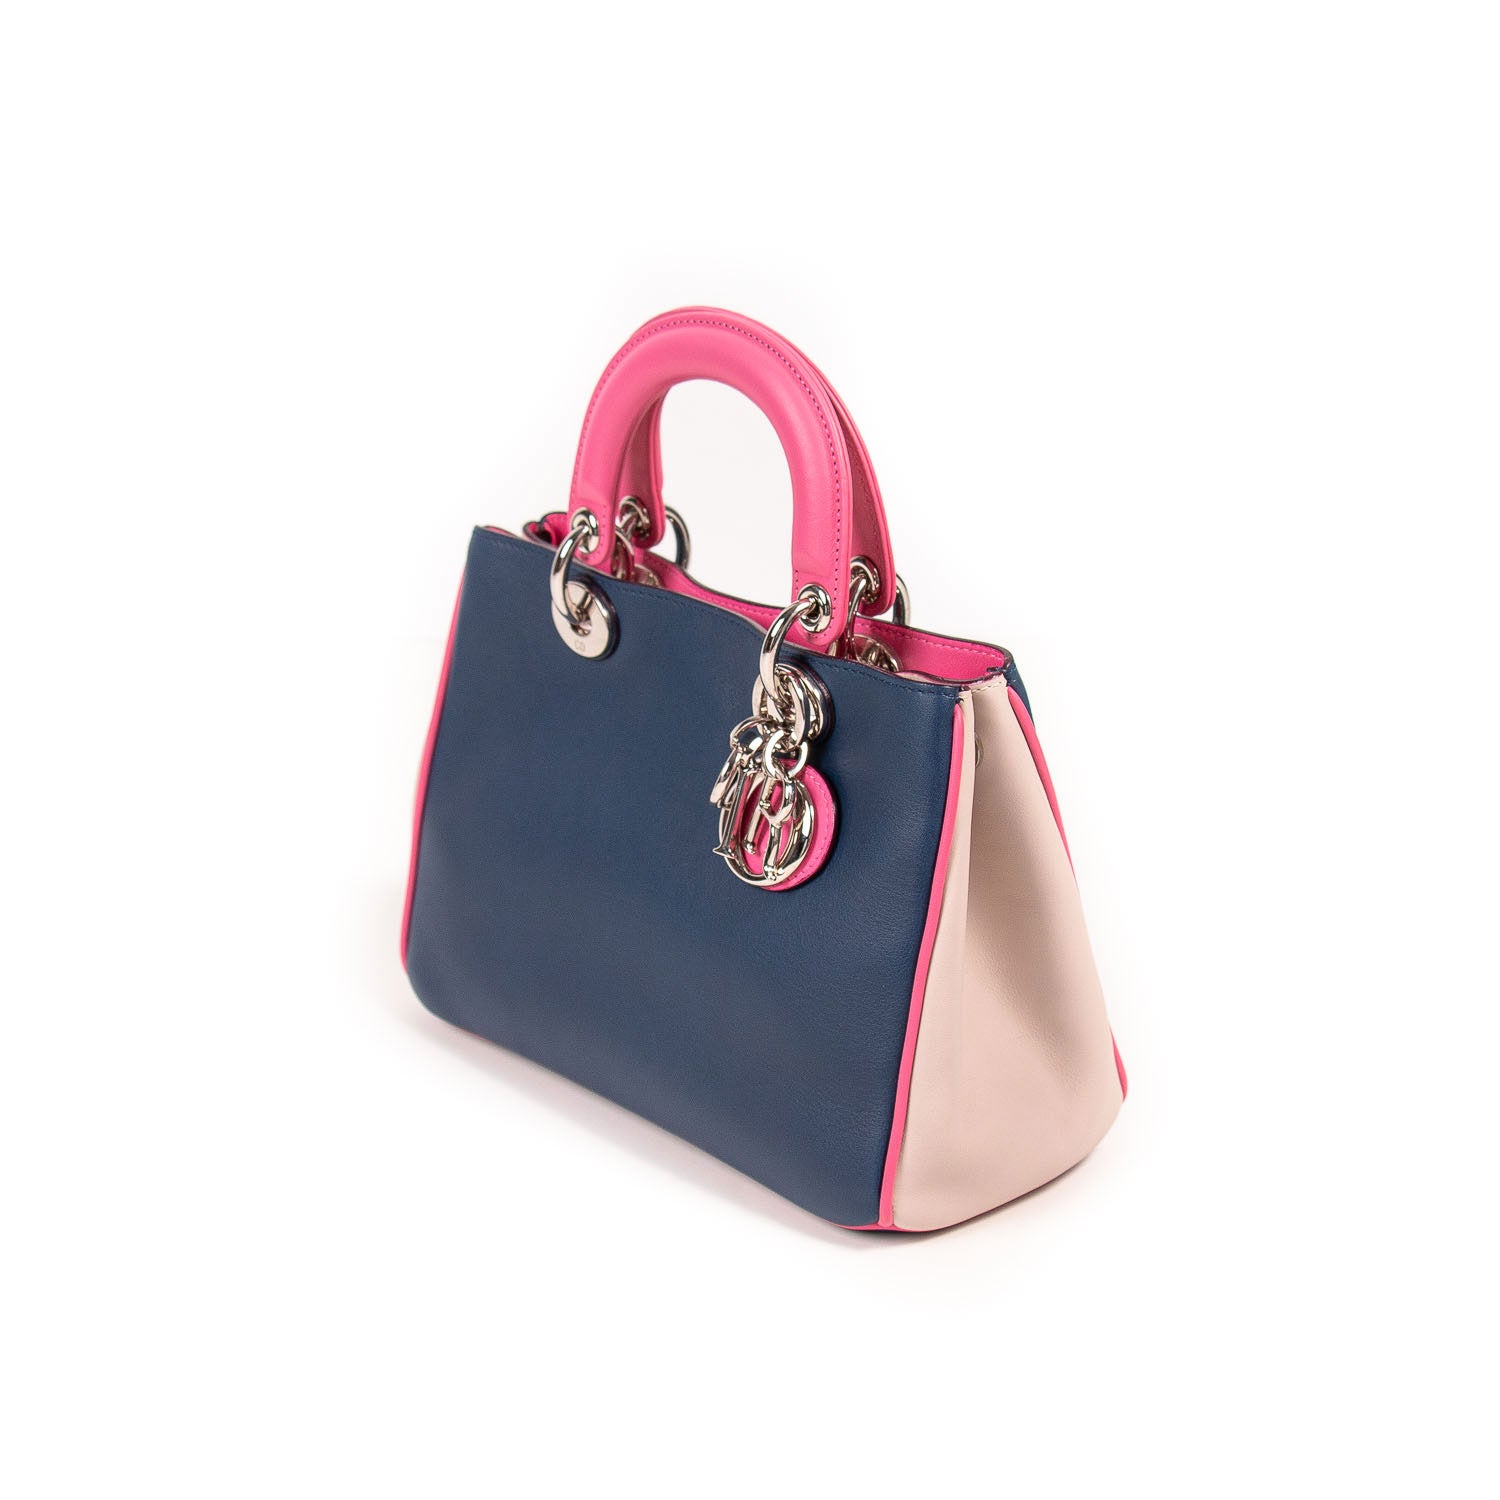 Shop authentic Christian Dior Tricolor Mini Diorissimo Bag at revogue ...